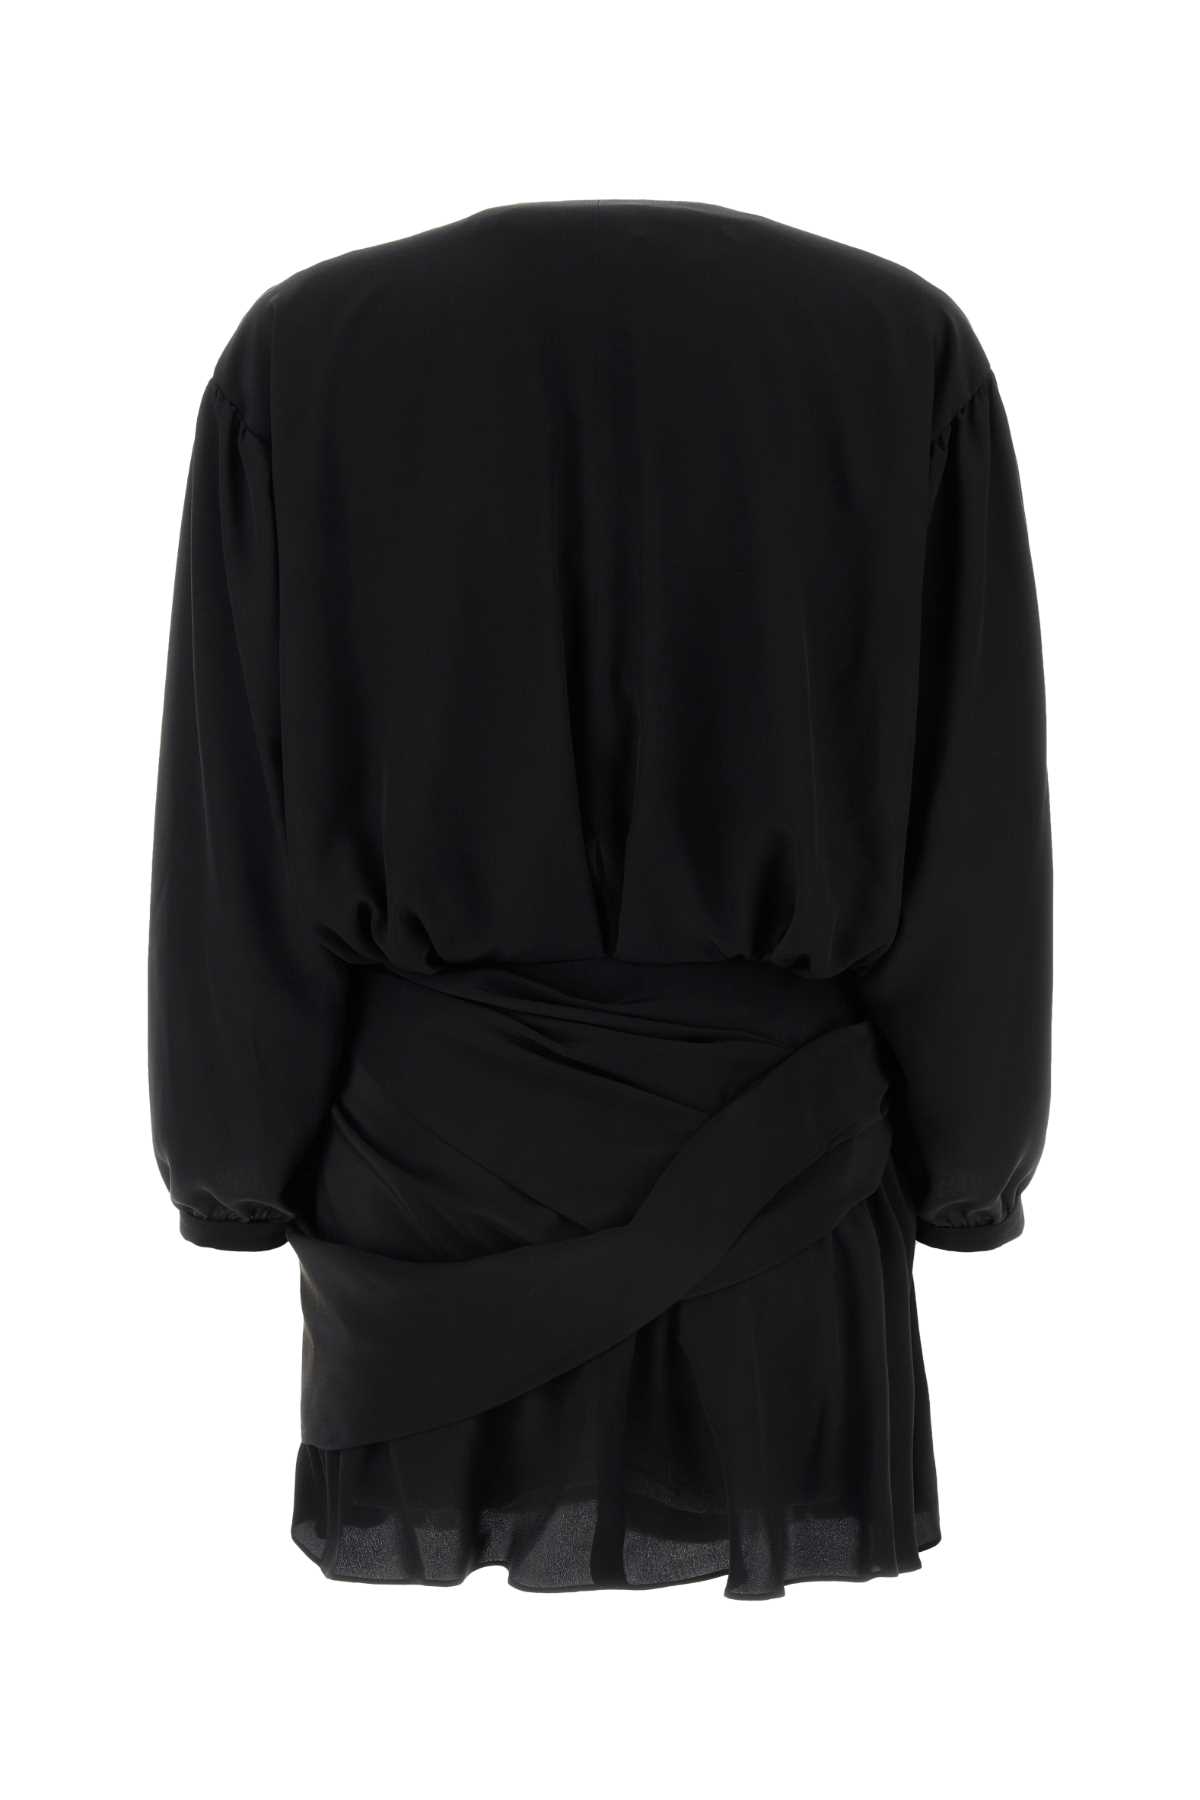 Balenciaga Black Crepe Mini Dress